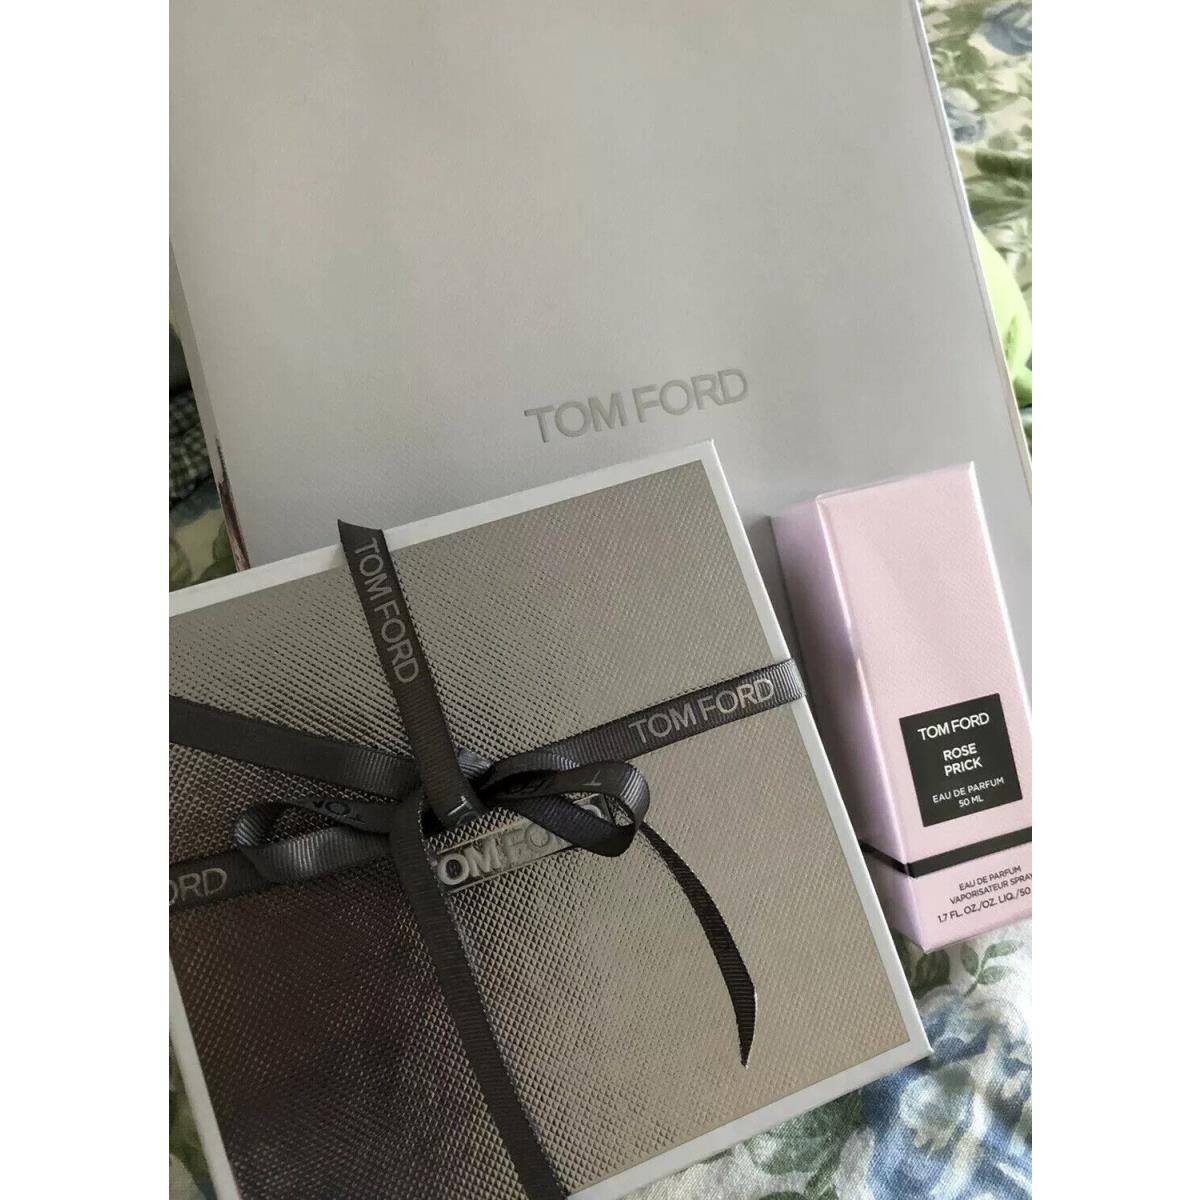 Tom Ford perfume,cologne,fragrance,parfum  4